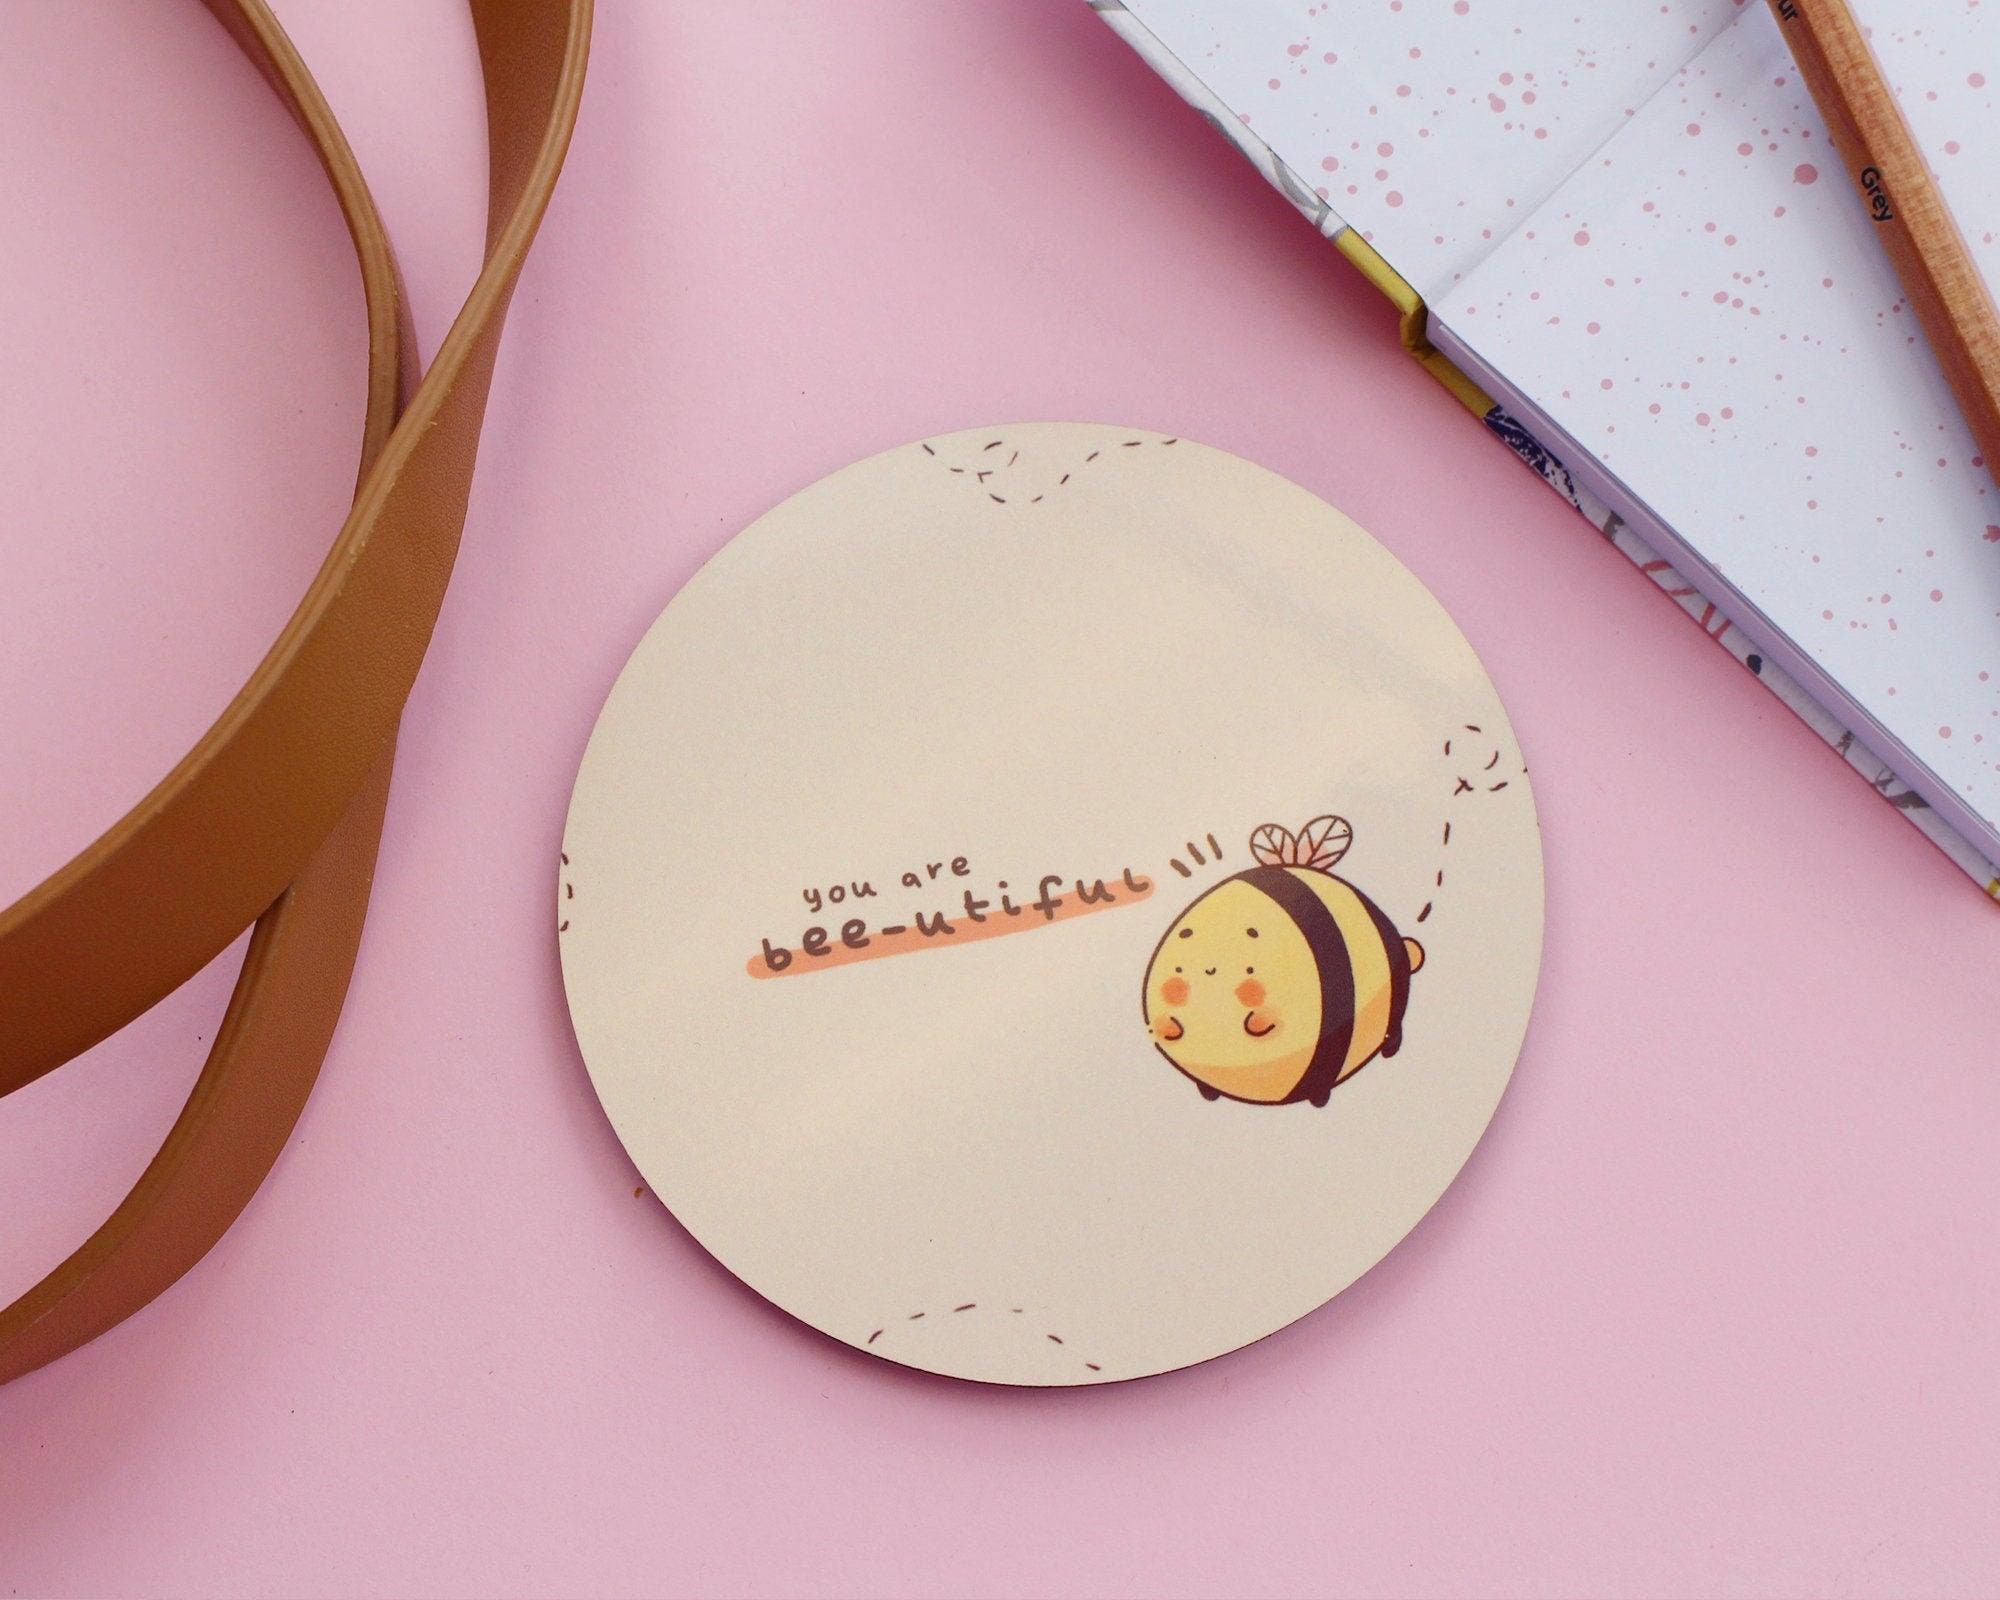 You Are Bee-utiful Coaster ~ Positivity Coaster - Katnipp Illustrations